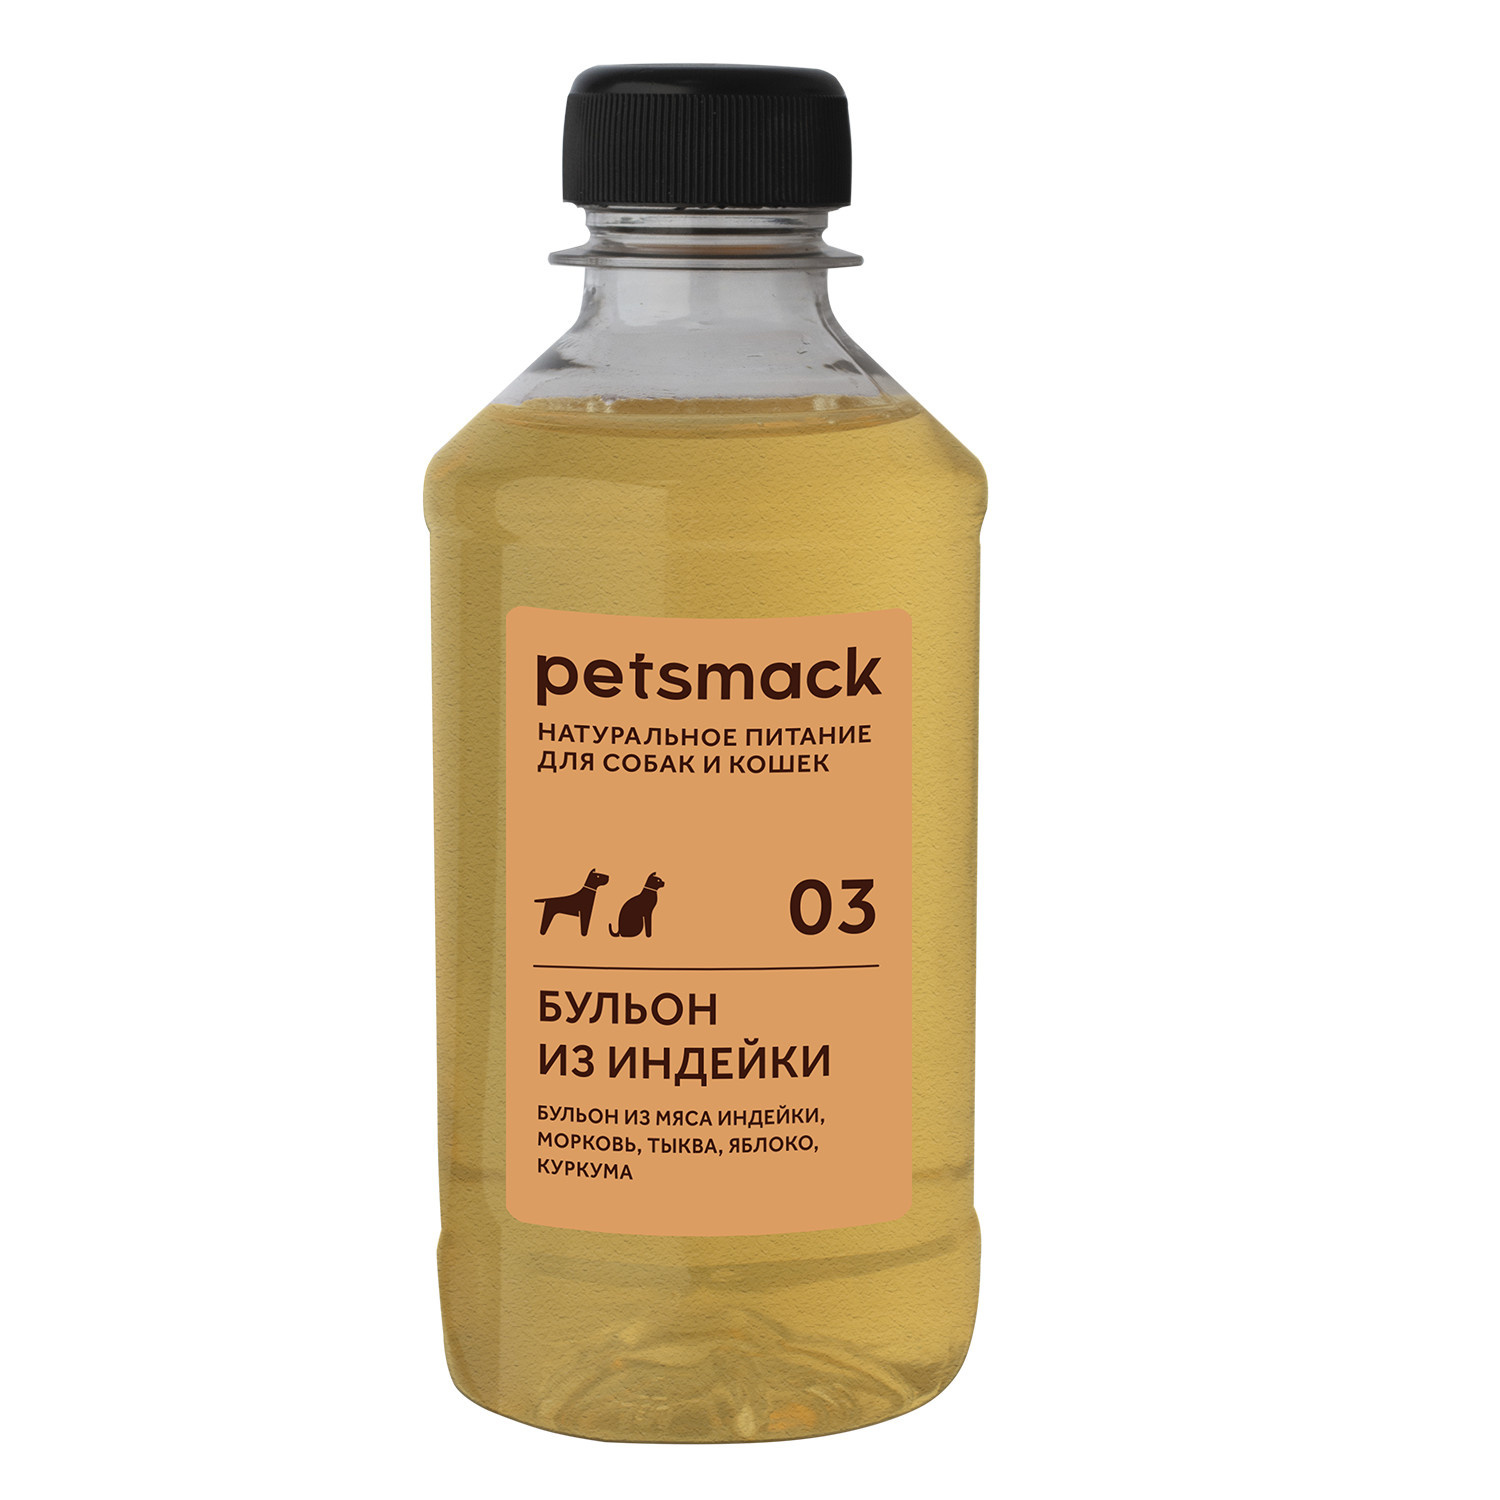 Petsmack Petsmack бульон из индейки (260 г)